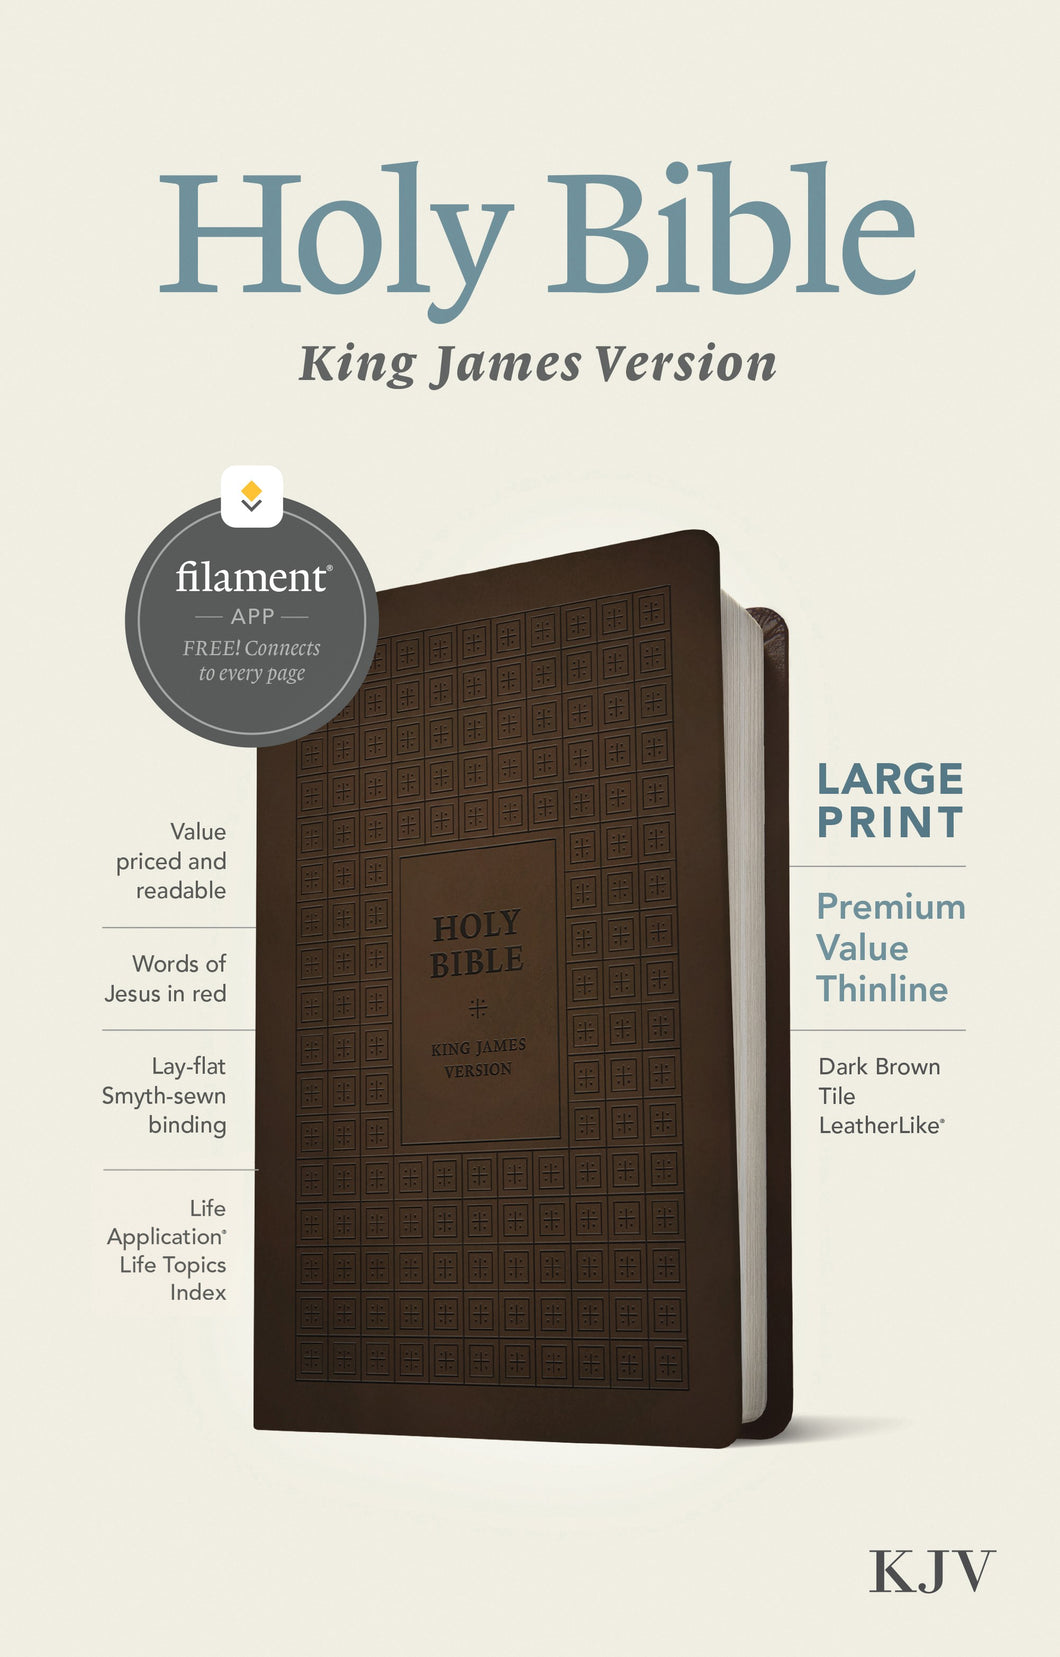 KJV Large Print Premium Value Thinline Bible  Filament Enabled Edition-Dark Brown Tile  LeatherLike